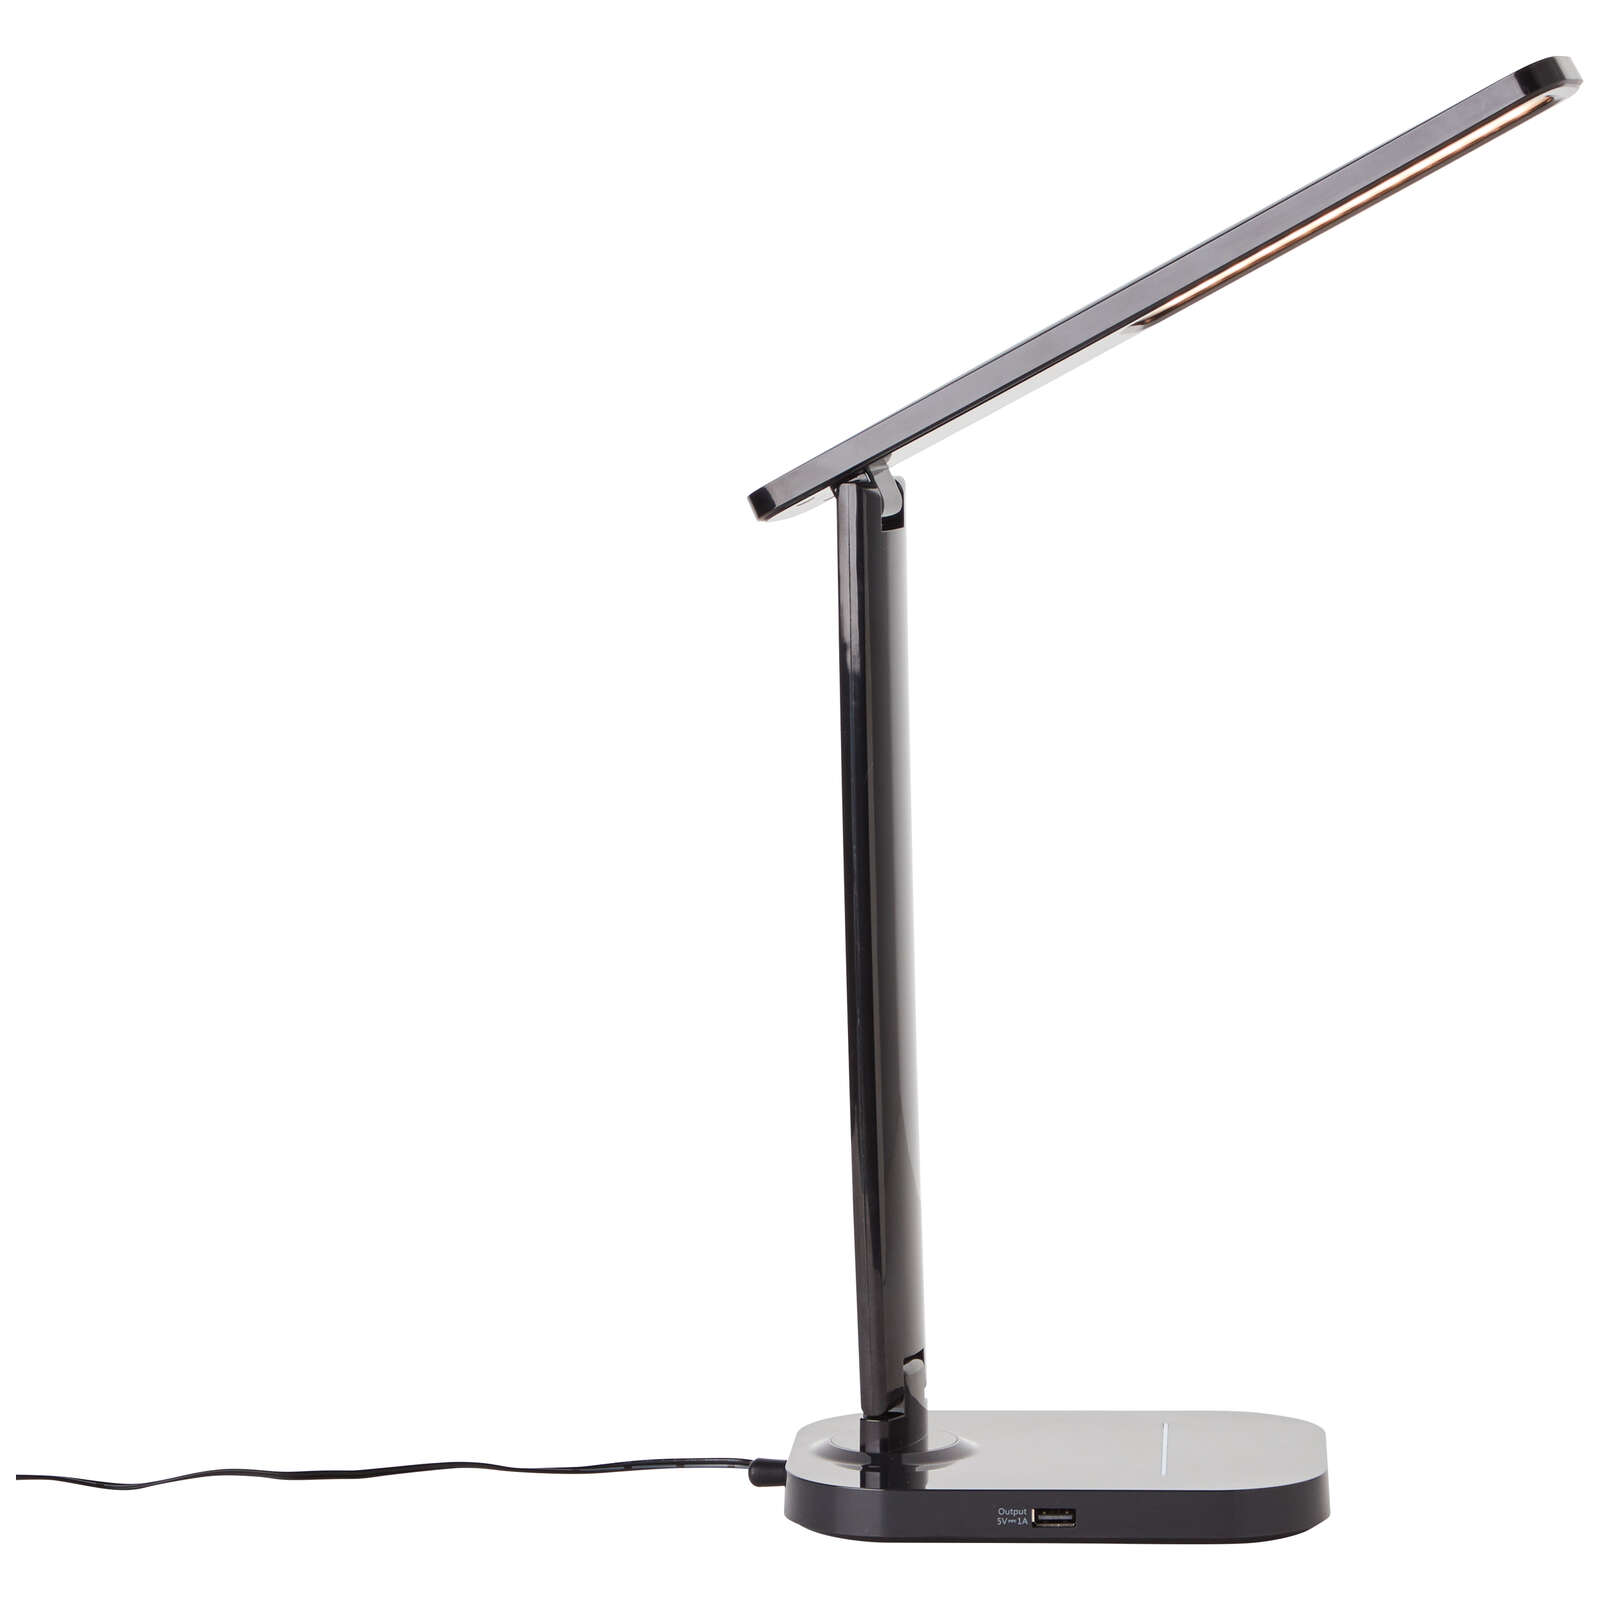             Plastic table lamp - Tabea 2 - Black
        